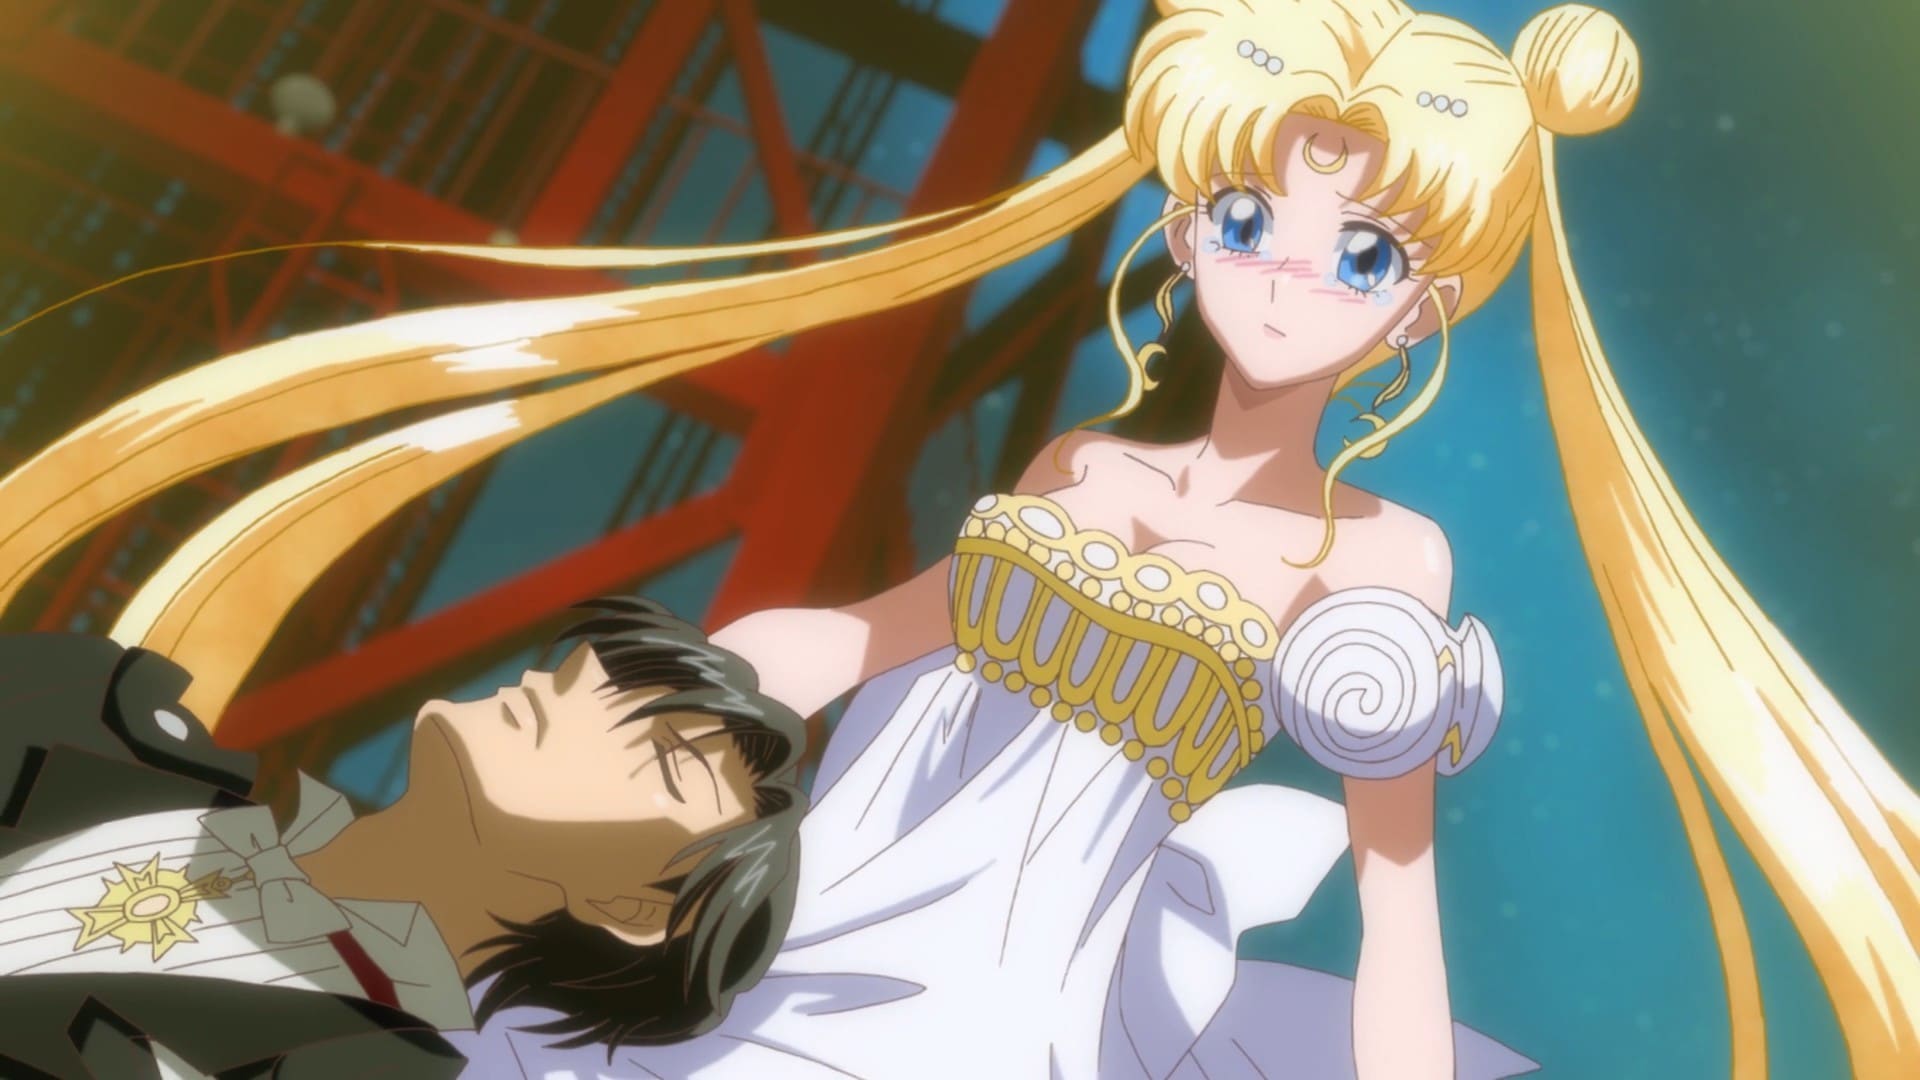 Watch Sailor Moon Crystal season 1 episode 1 streaming online